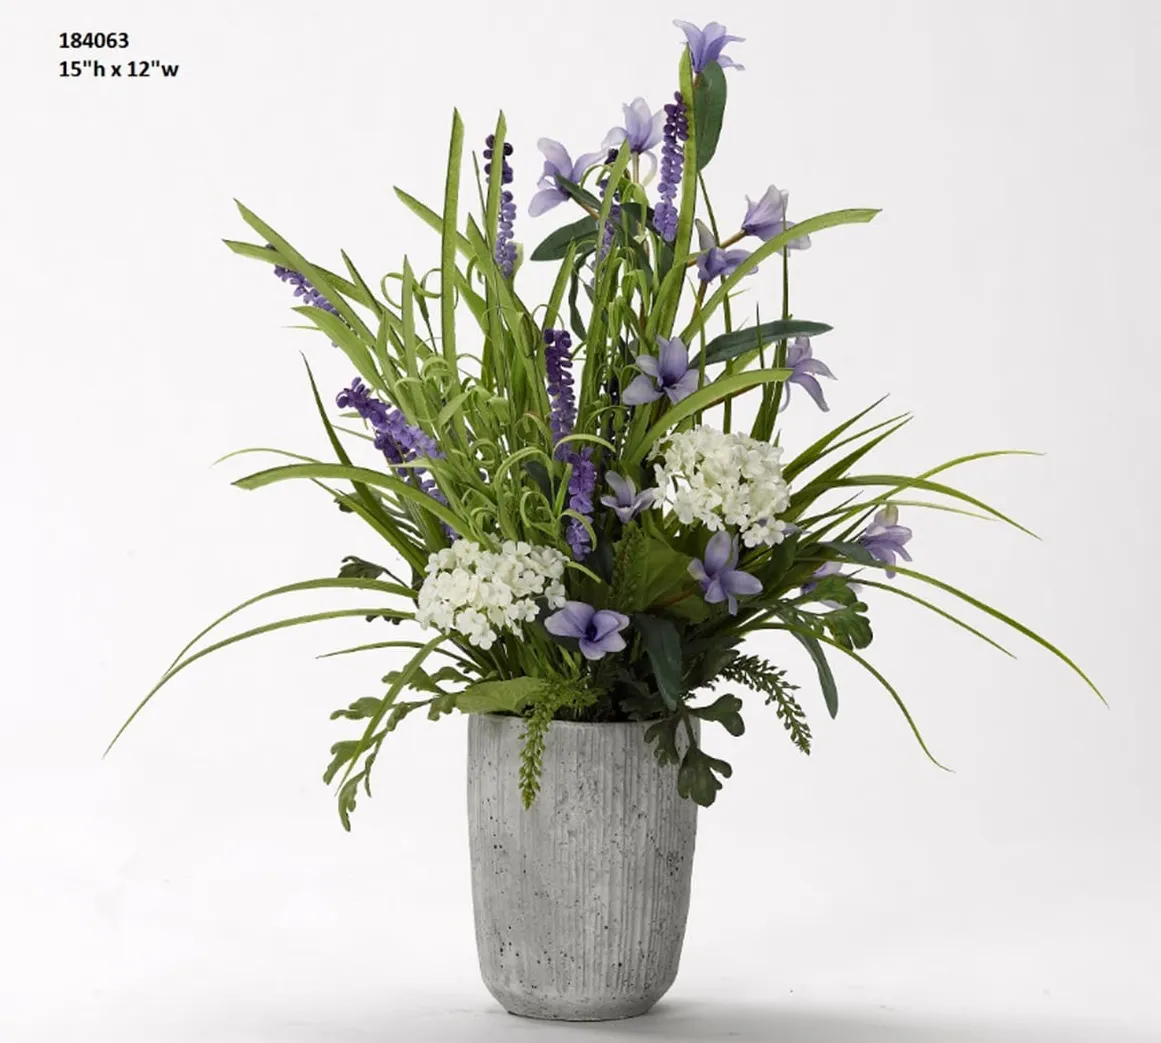 Wild Flowers in Concrete Vase 12"W x 15"H